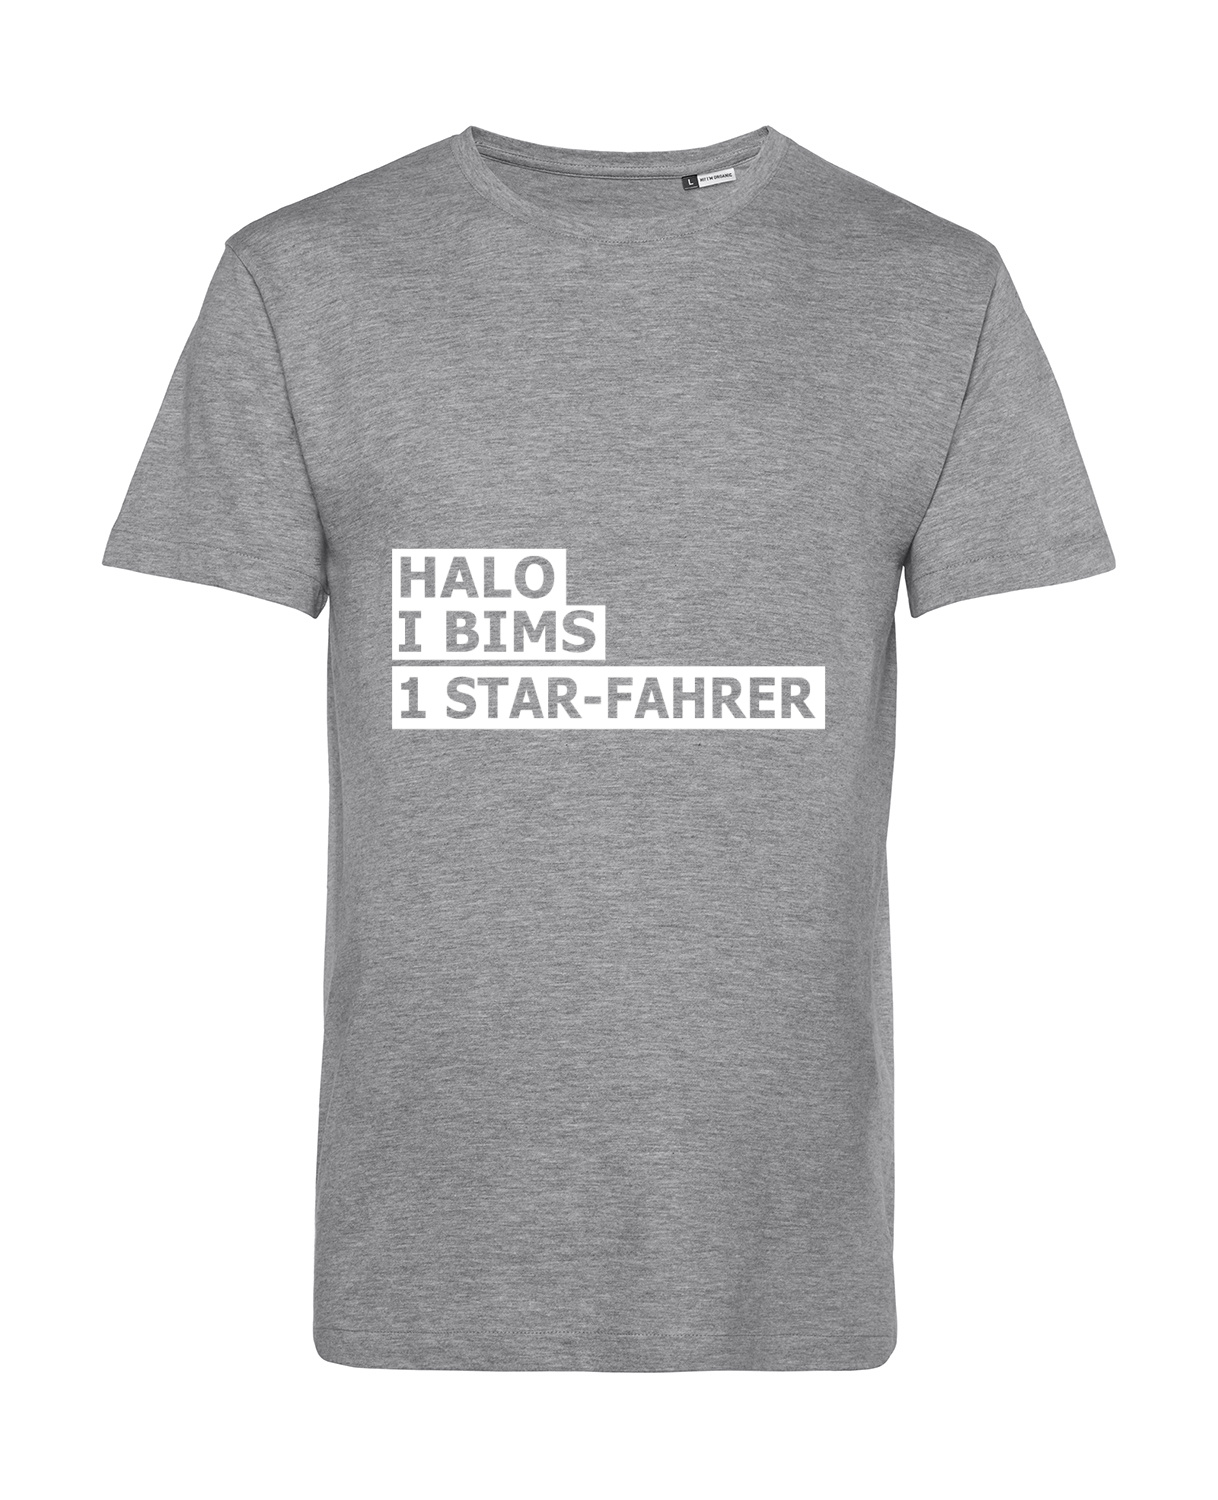 Nachhaltiges T-Shirt Herren 2Takter - Halo I bims 1 Star-Fahrer